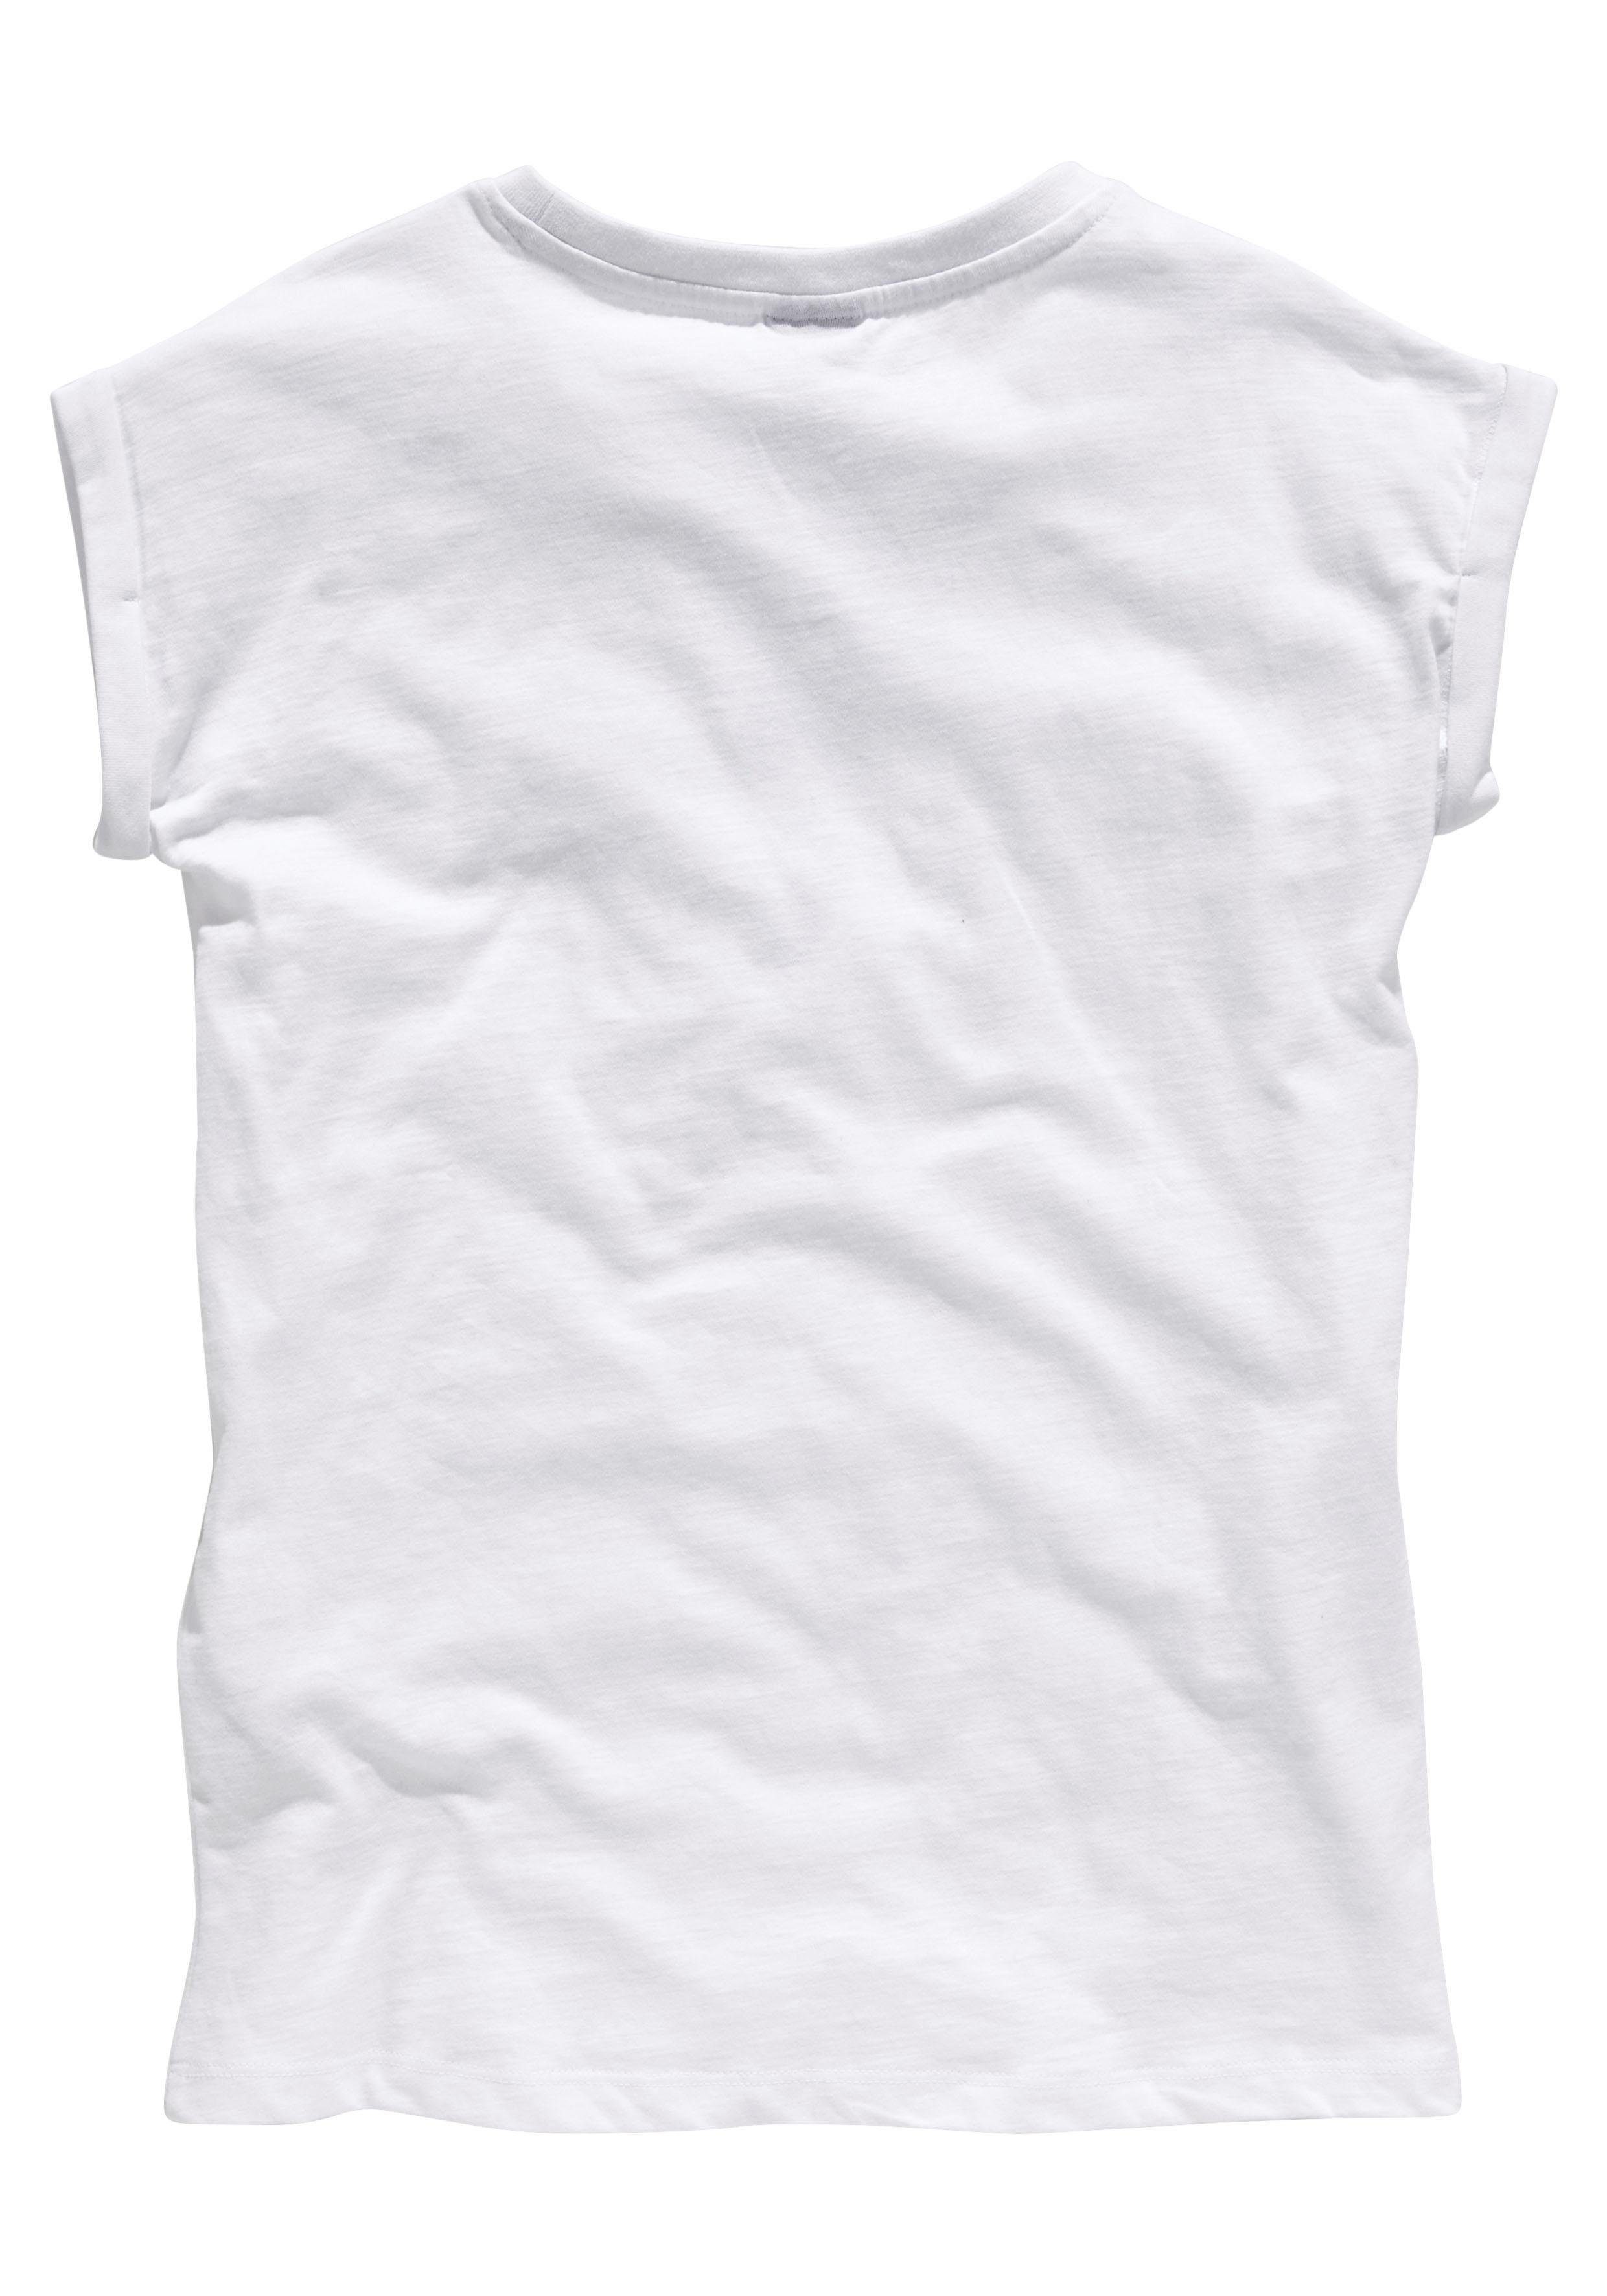 KIDSWORLD T-Shirt Bevor Du fragst: Form legerer weiter in NEIN